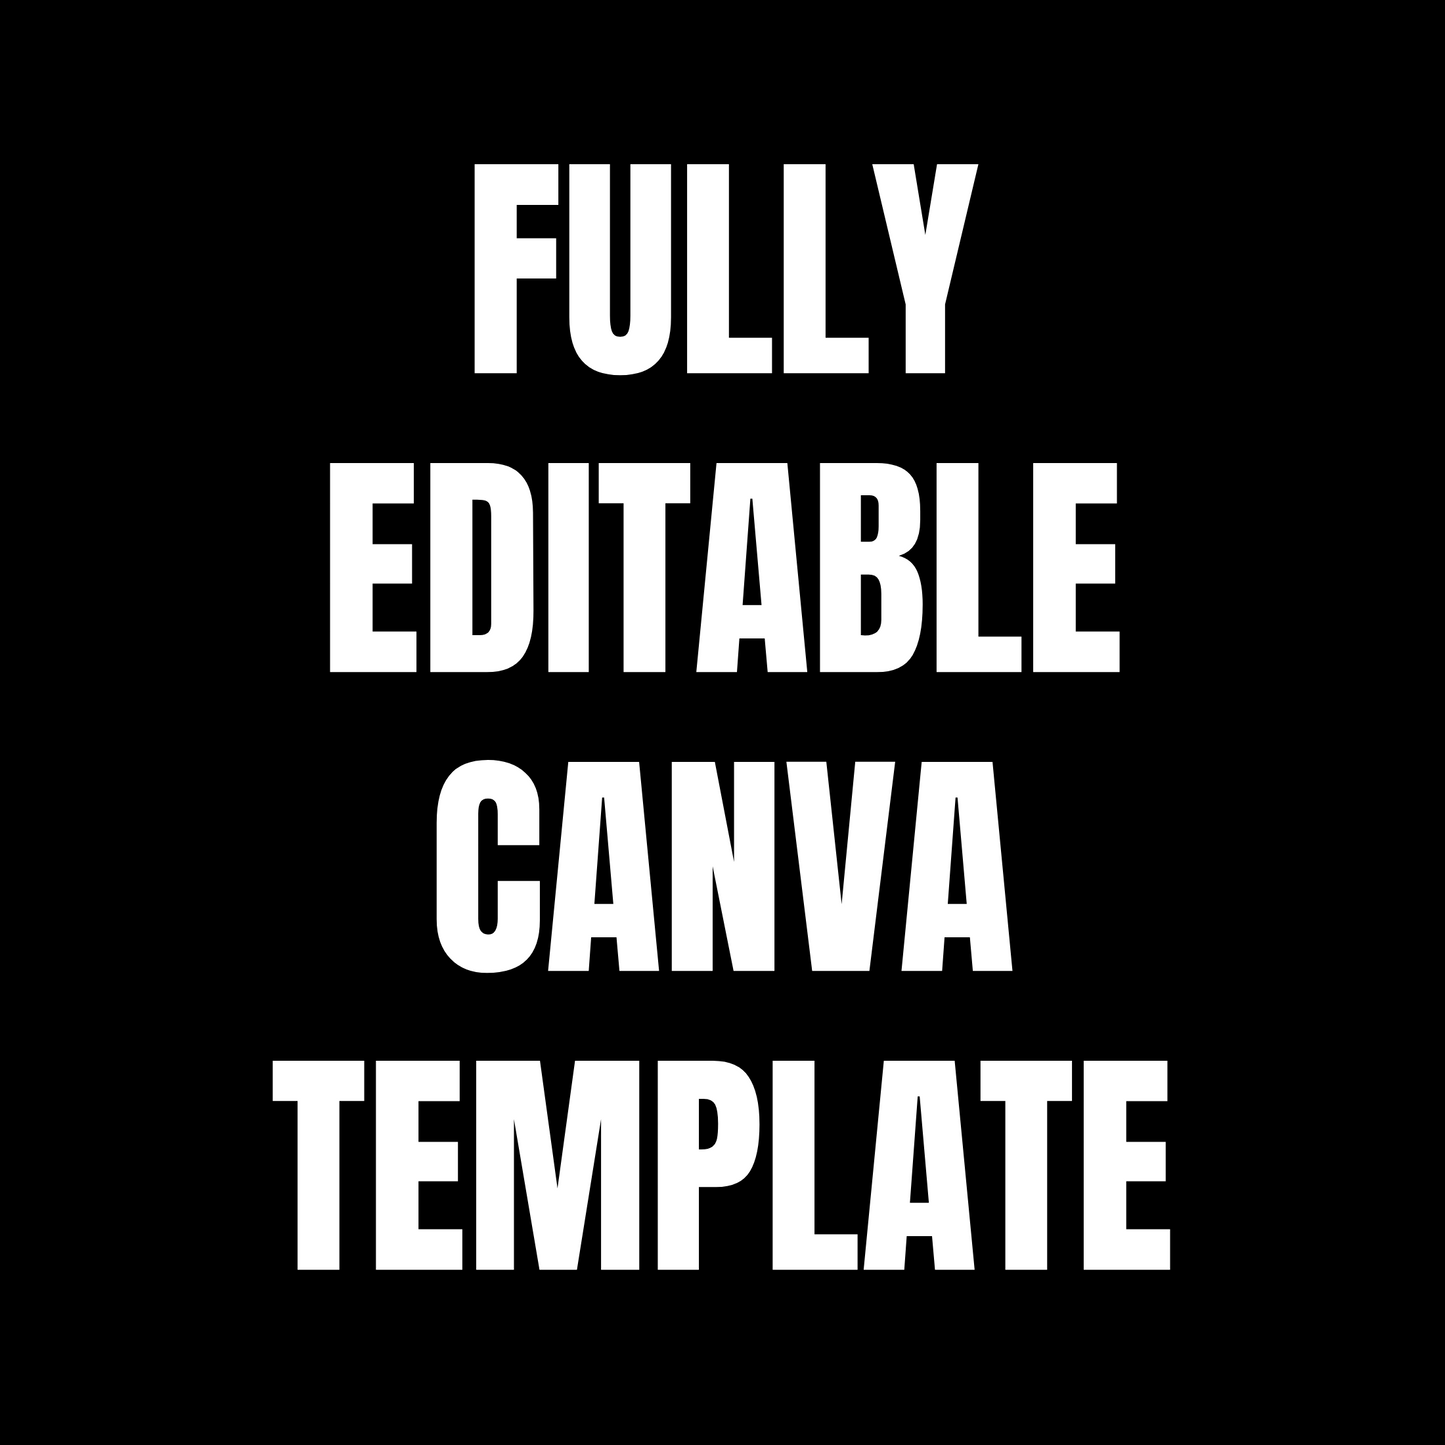 04-EB | Editable Journal PLR Kit with a Bonus Hyperlinked Planner | Fully Editable Canva Templates